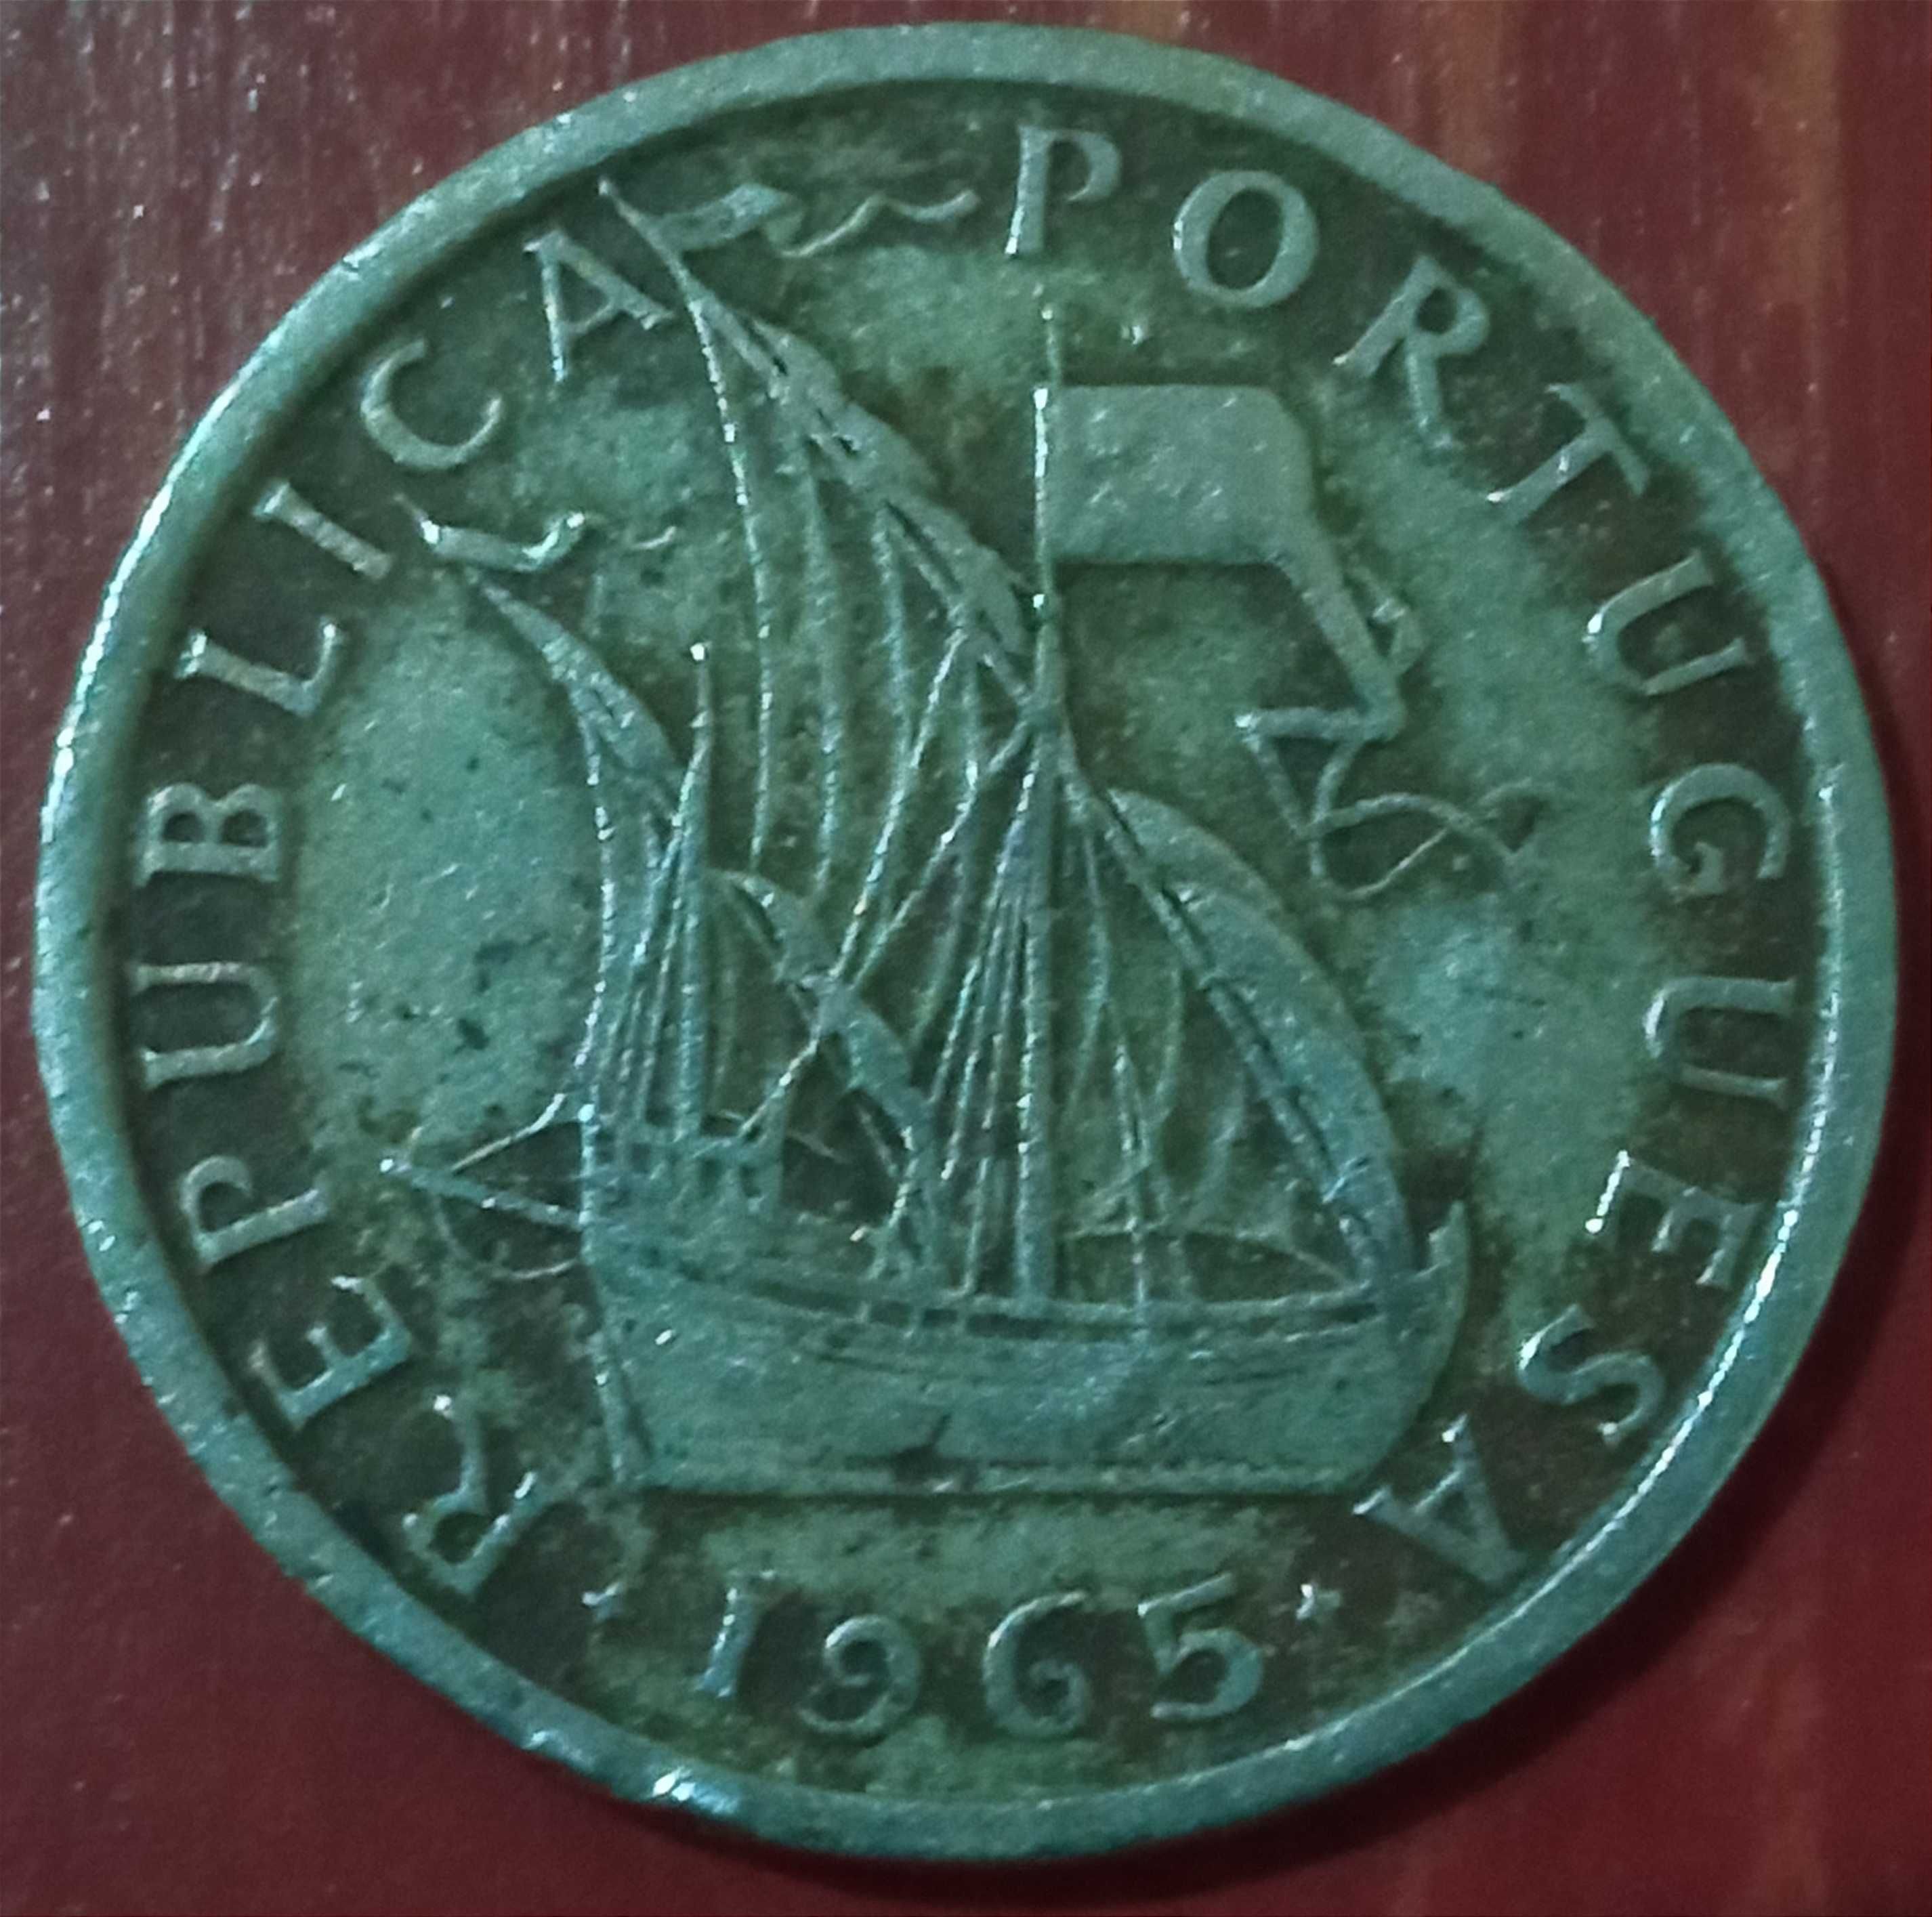 5 escudos República Portuguesa 1965